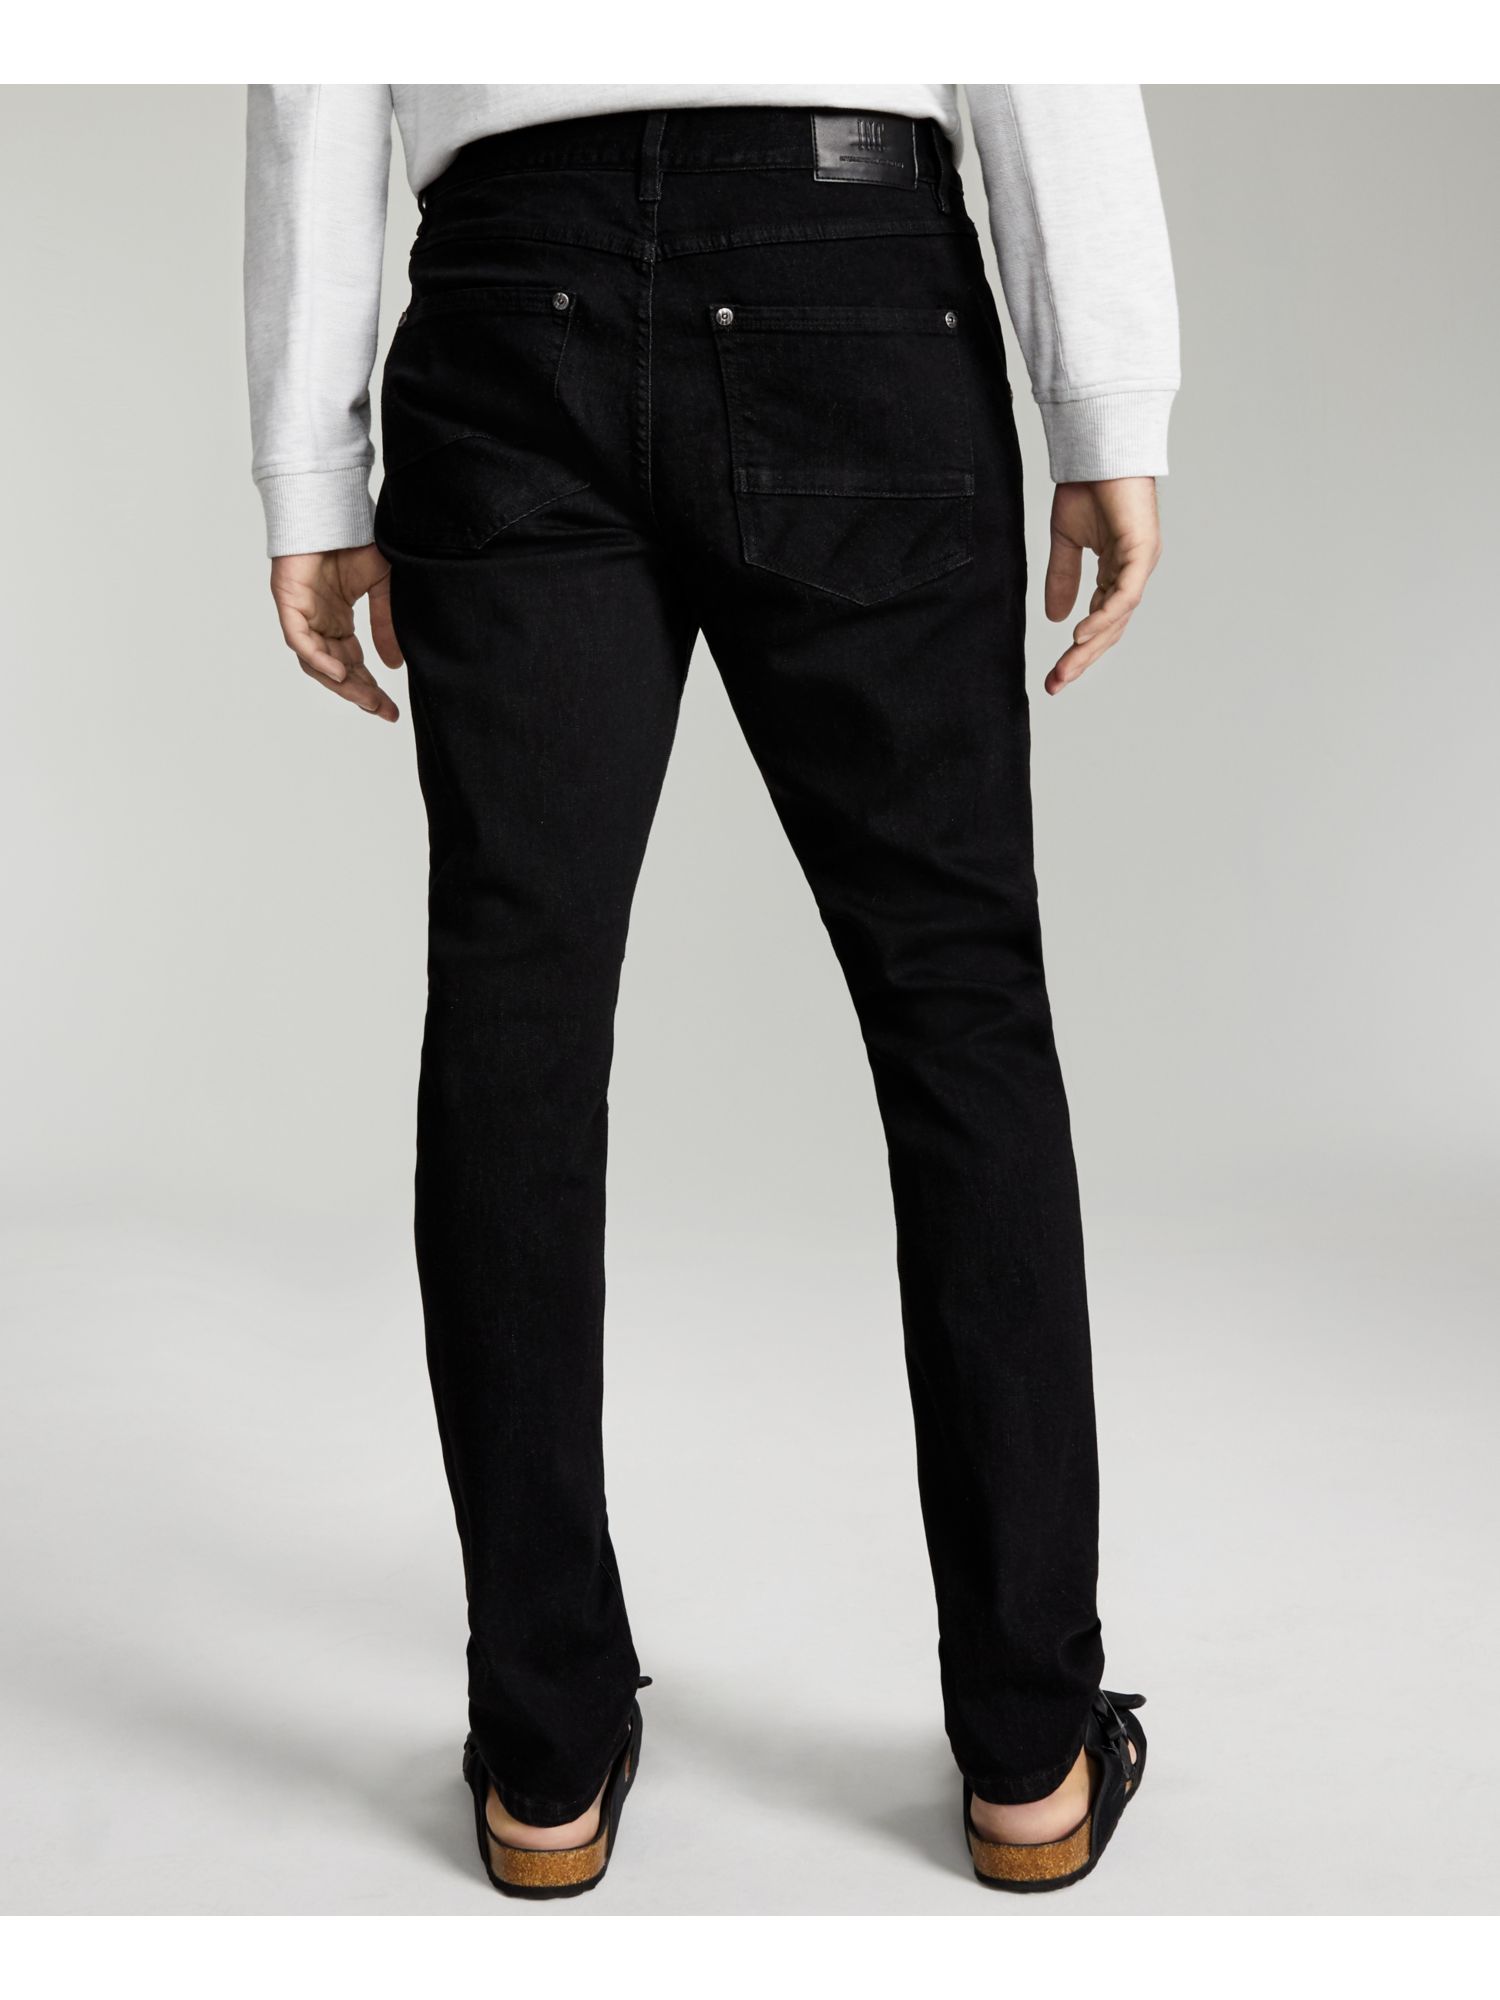 International Concepts INC Mens Black Easy Care, Skinny Fit Denim Jeans 34W/ 32L